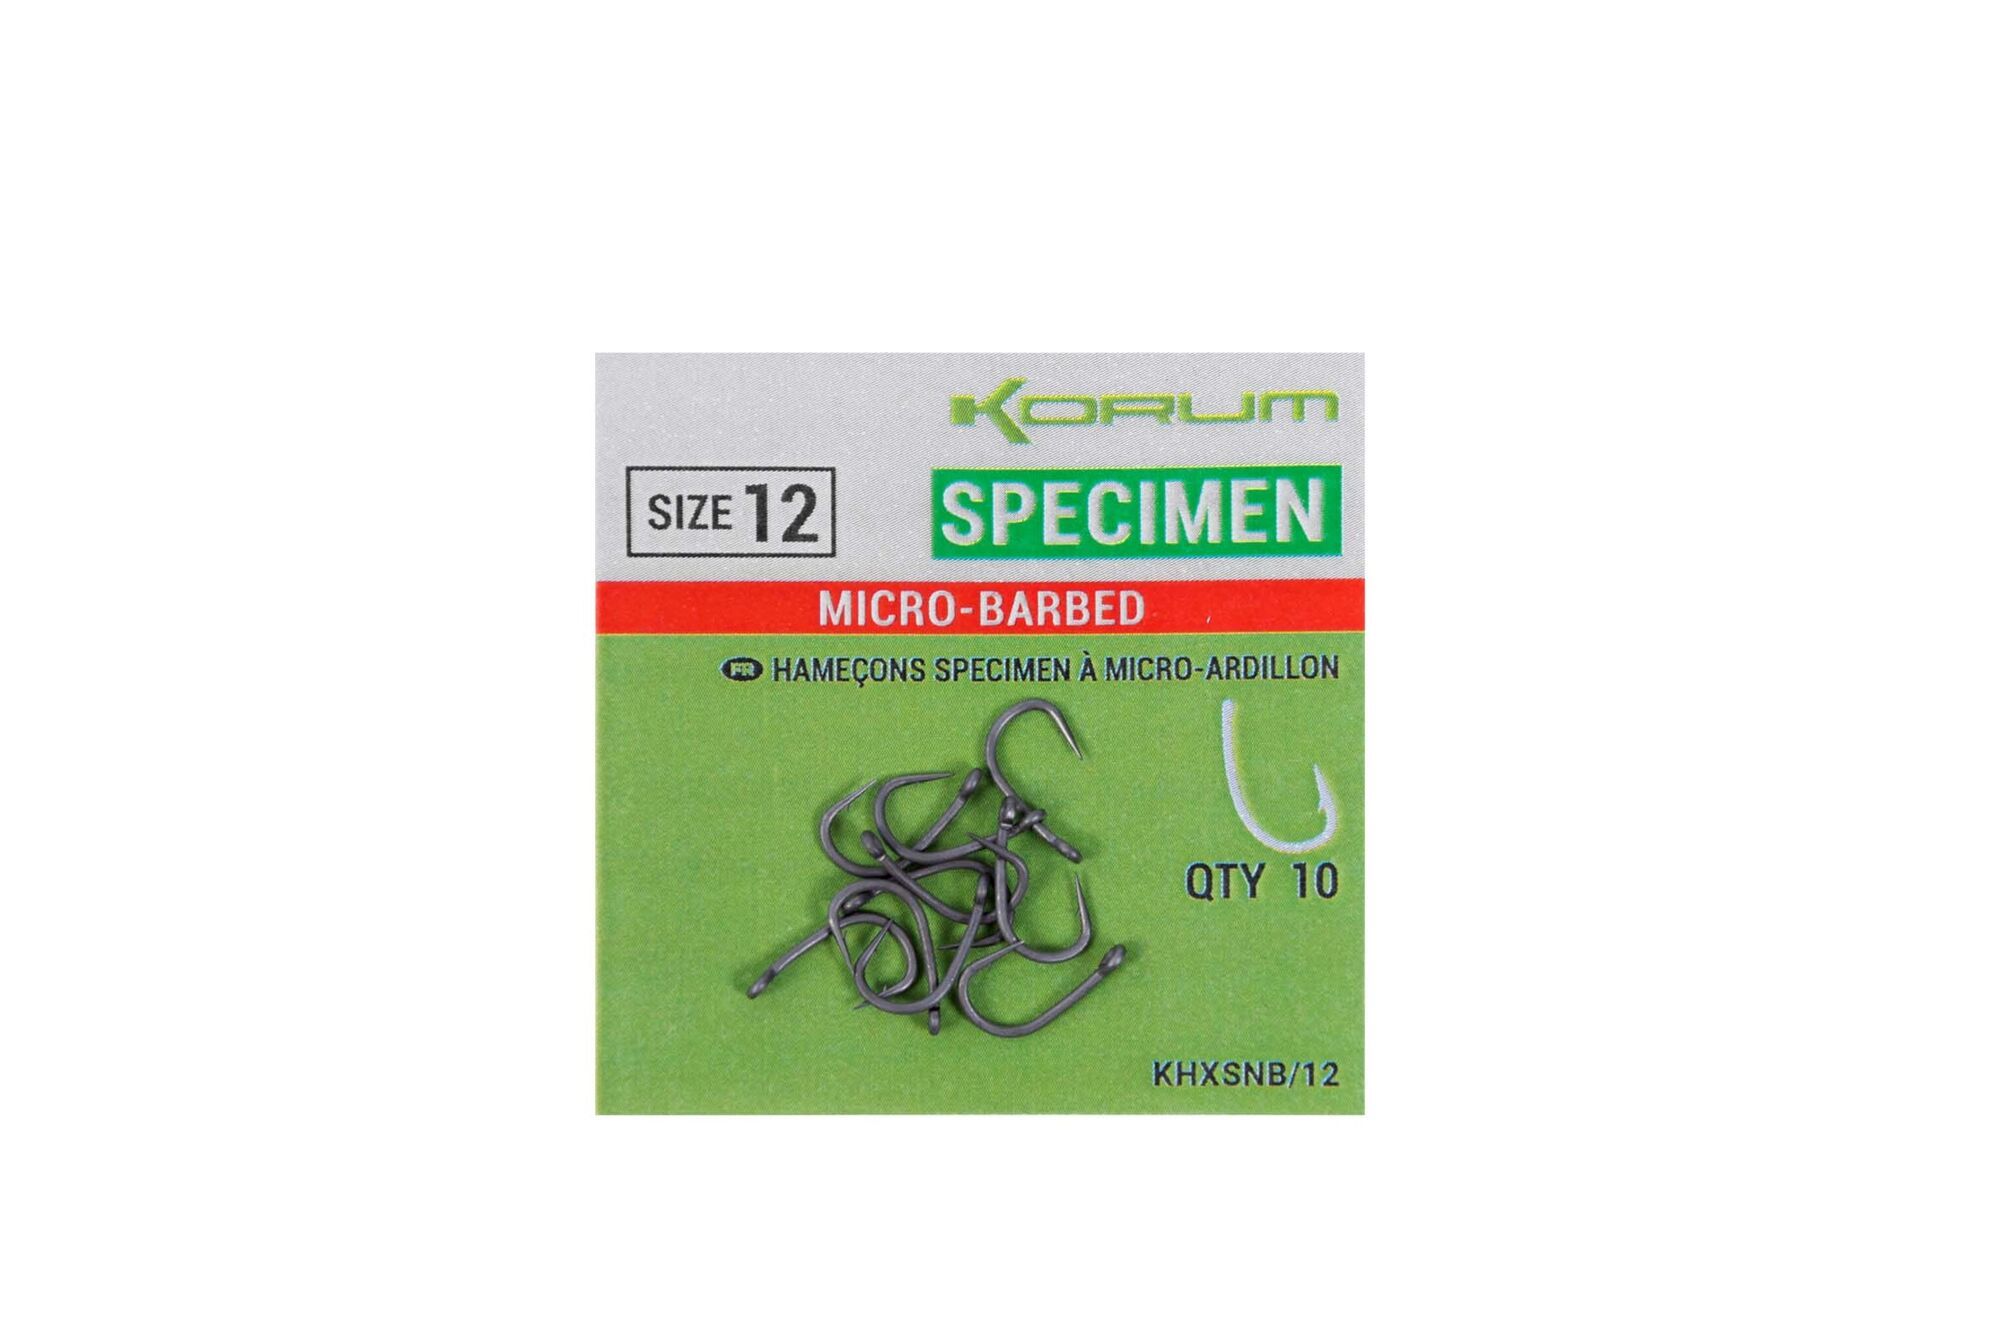 Korum Xpert Specimen Micro Barbed Hooks Carp Coarse Fishing All Sizes Available 